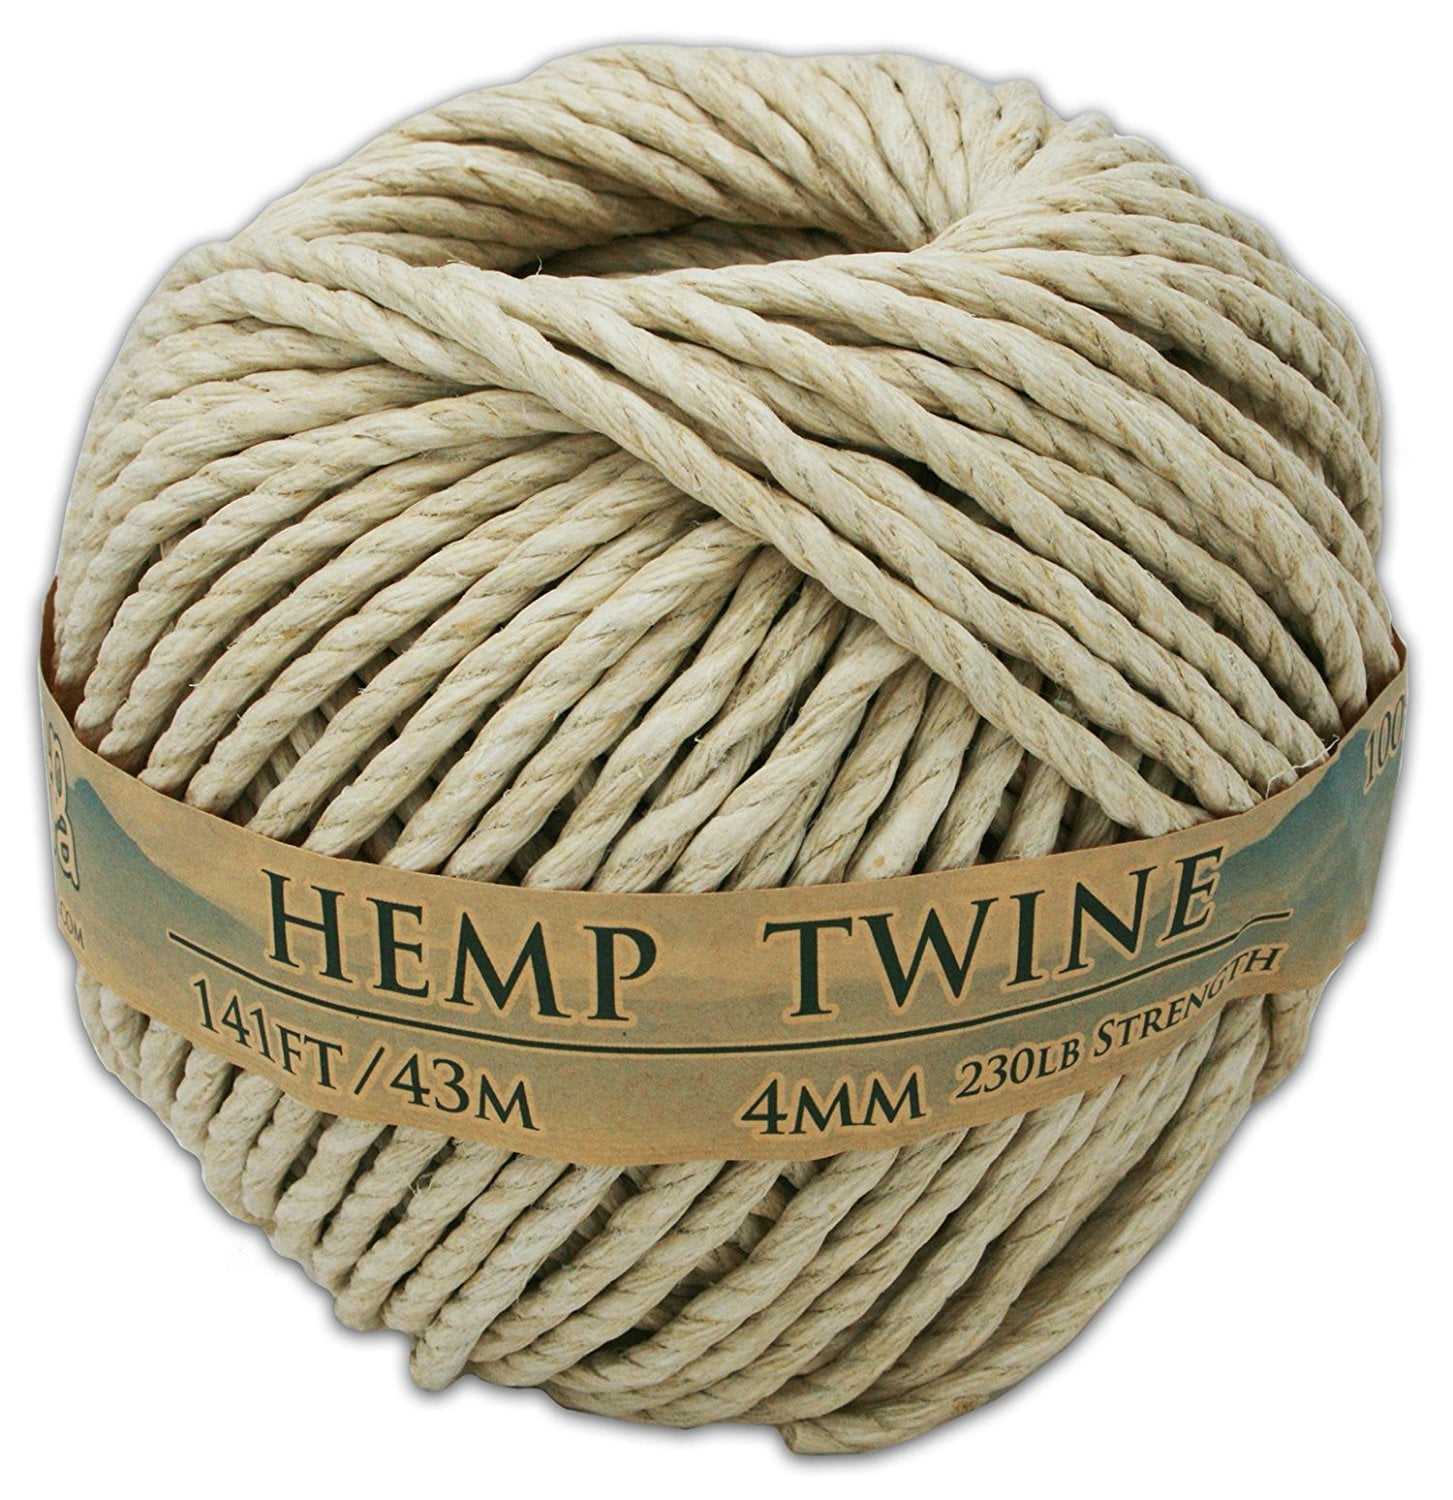 The Beadsmith Natural Hemp Twine Bead Cord 2mm / 197 Feet (60 Meters) 